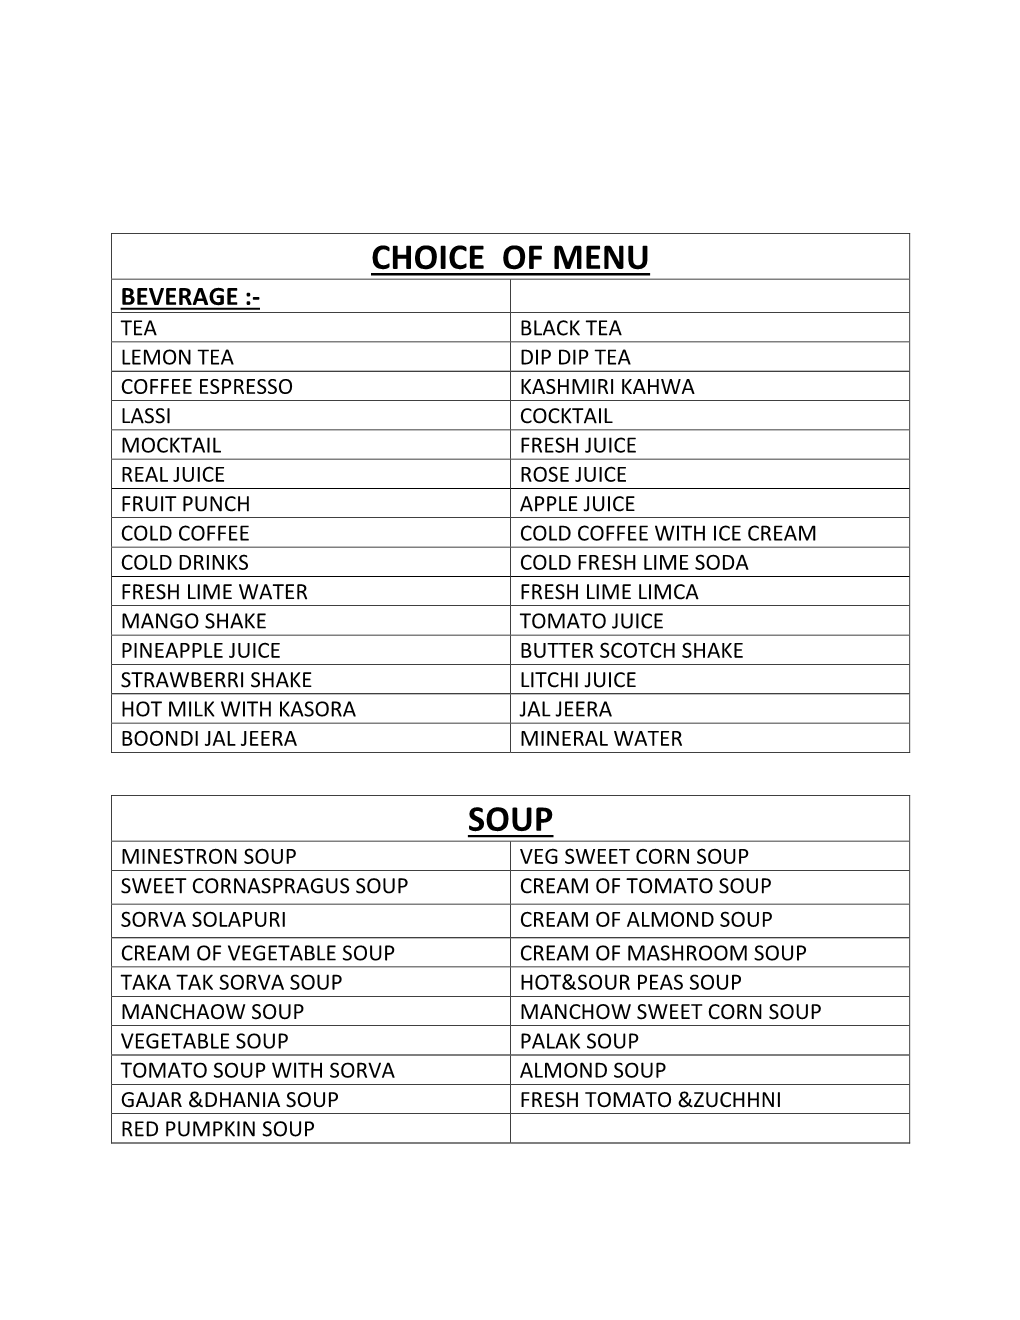 Choice of Menu Soup